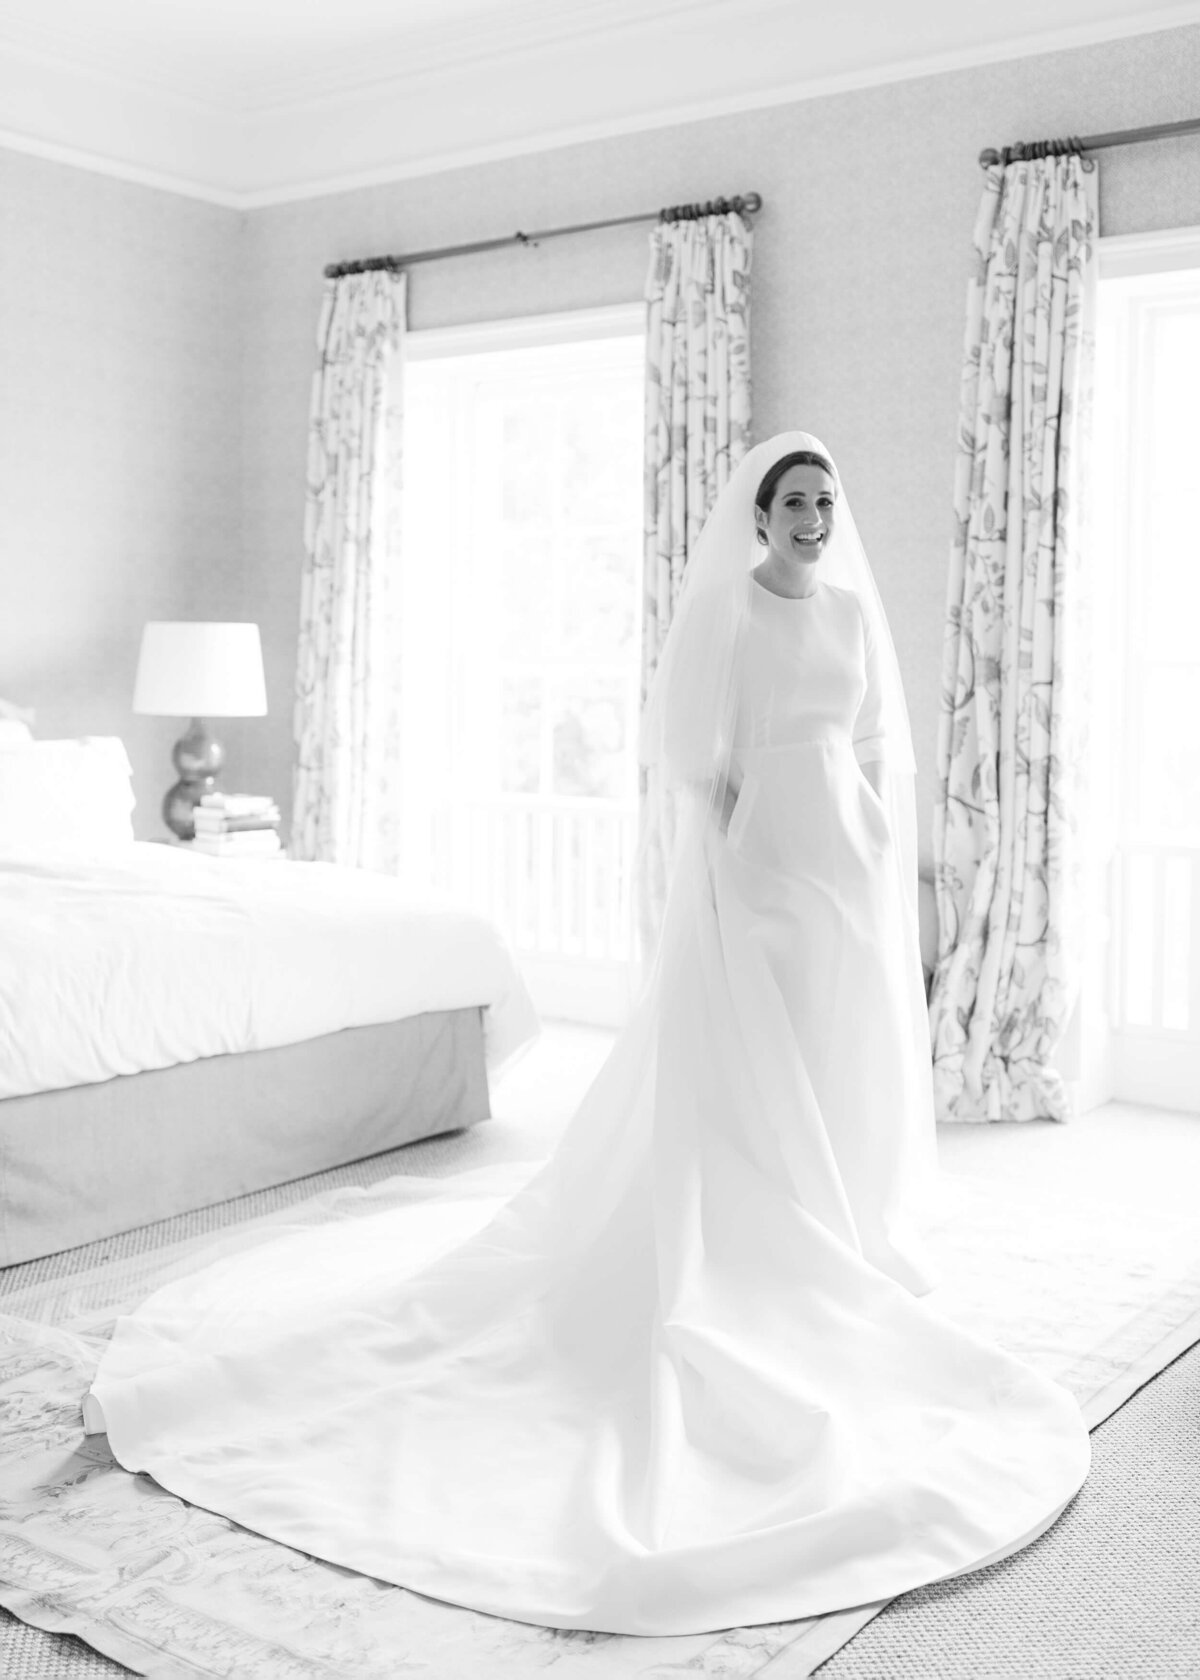 chloe-winstanley-weddings-suzannah-bride-portrait-black-white